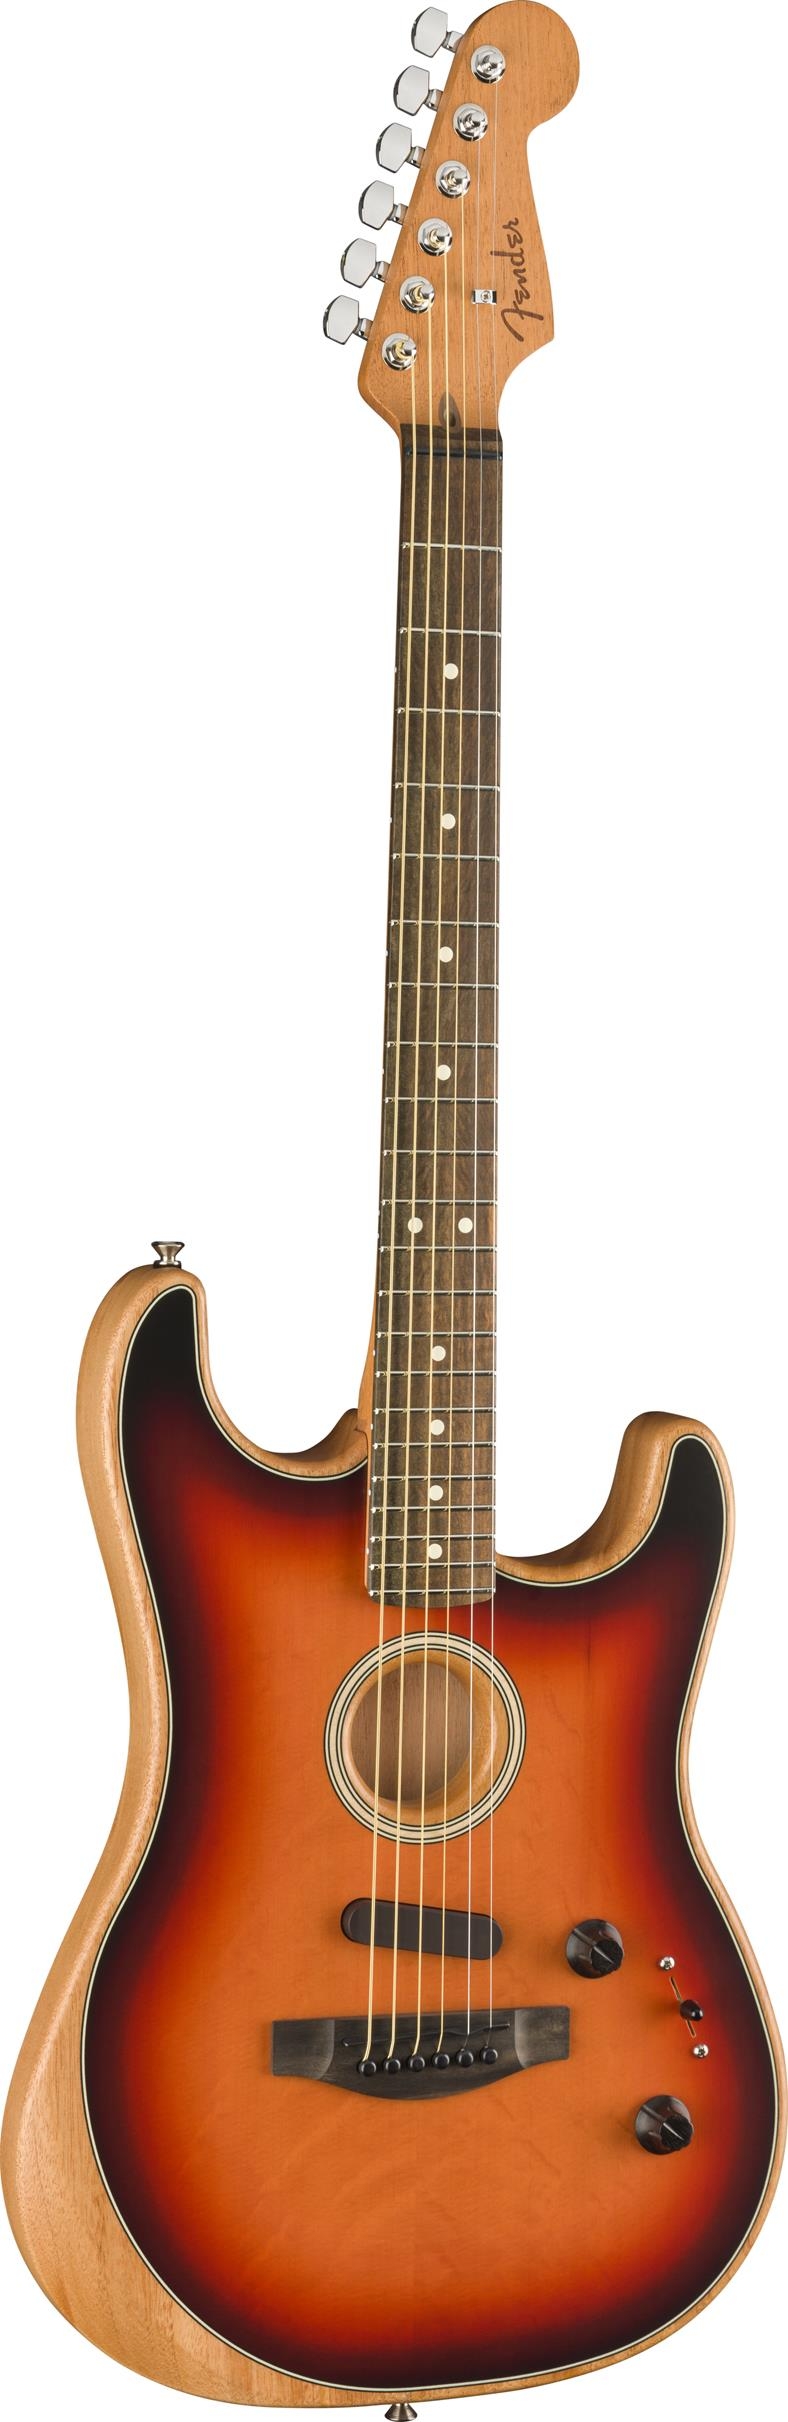 Fender Acoustasonic Strat - Sunburst touche ébène